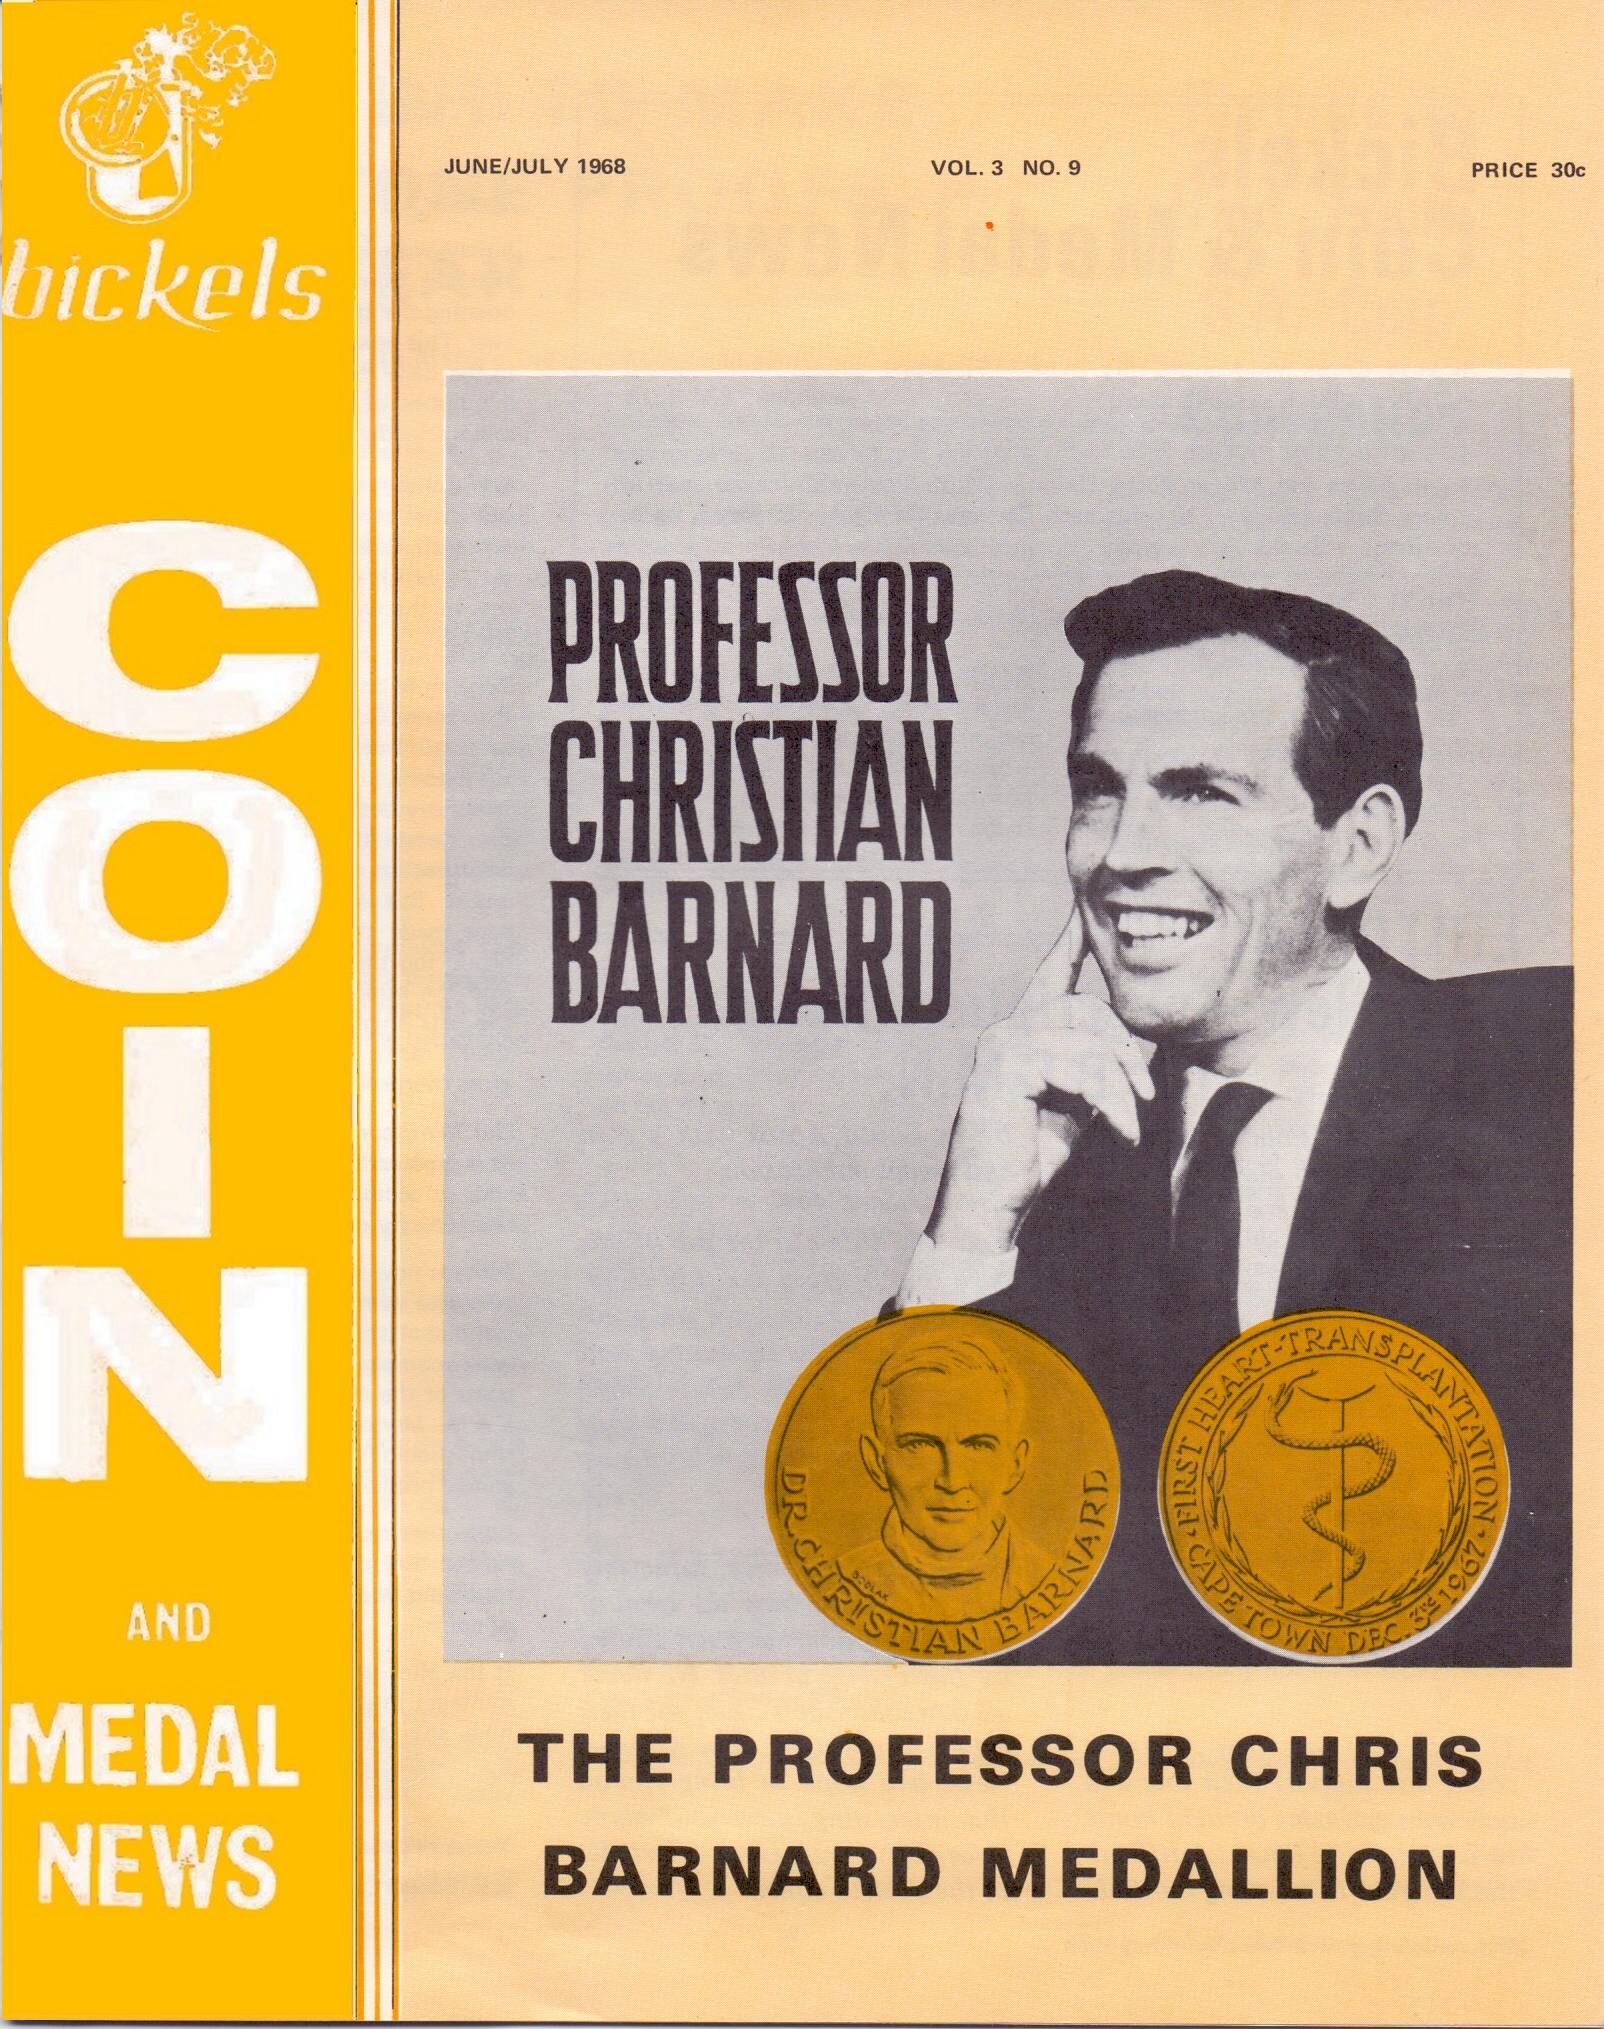 Bickels Coin & Medal News June July 1968 Vol 3 No 9